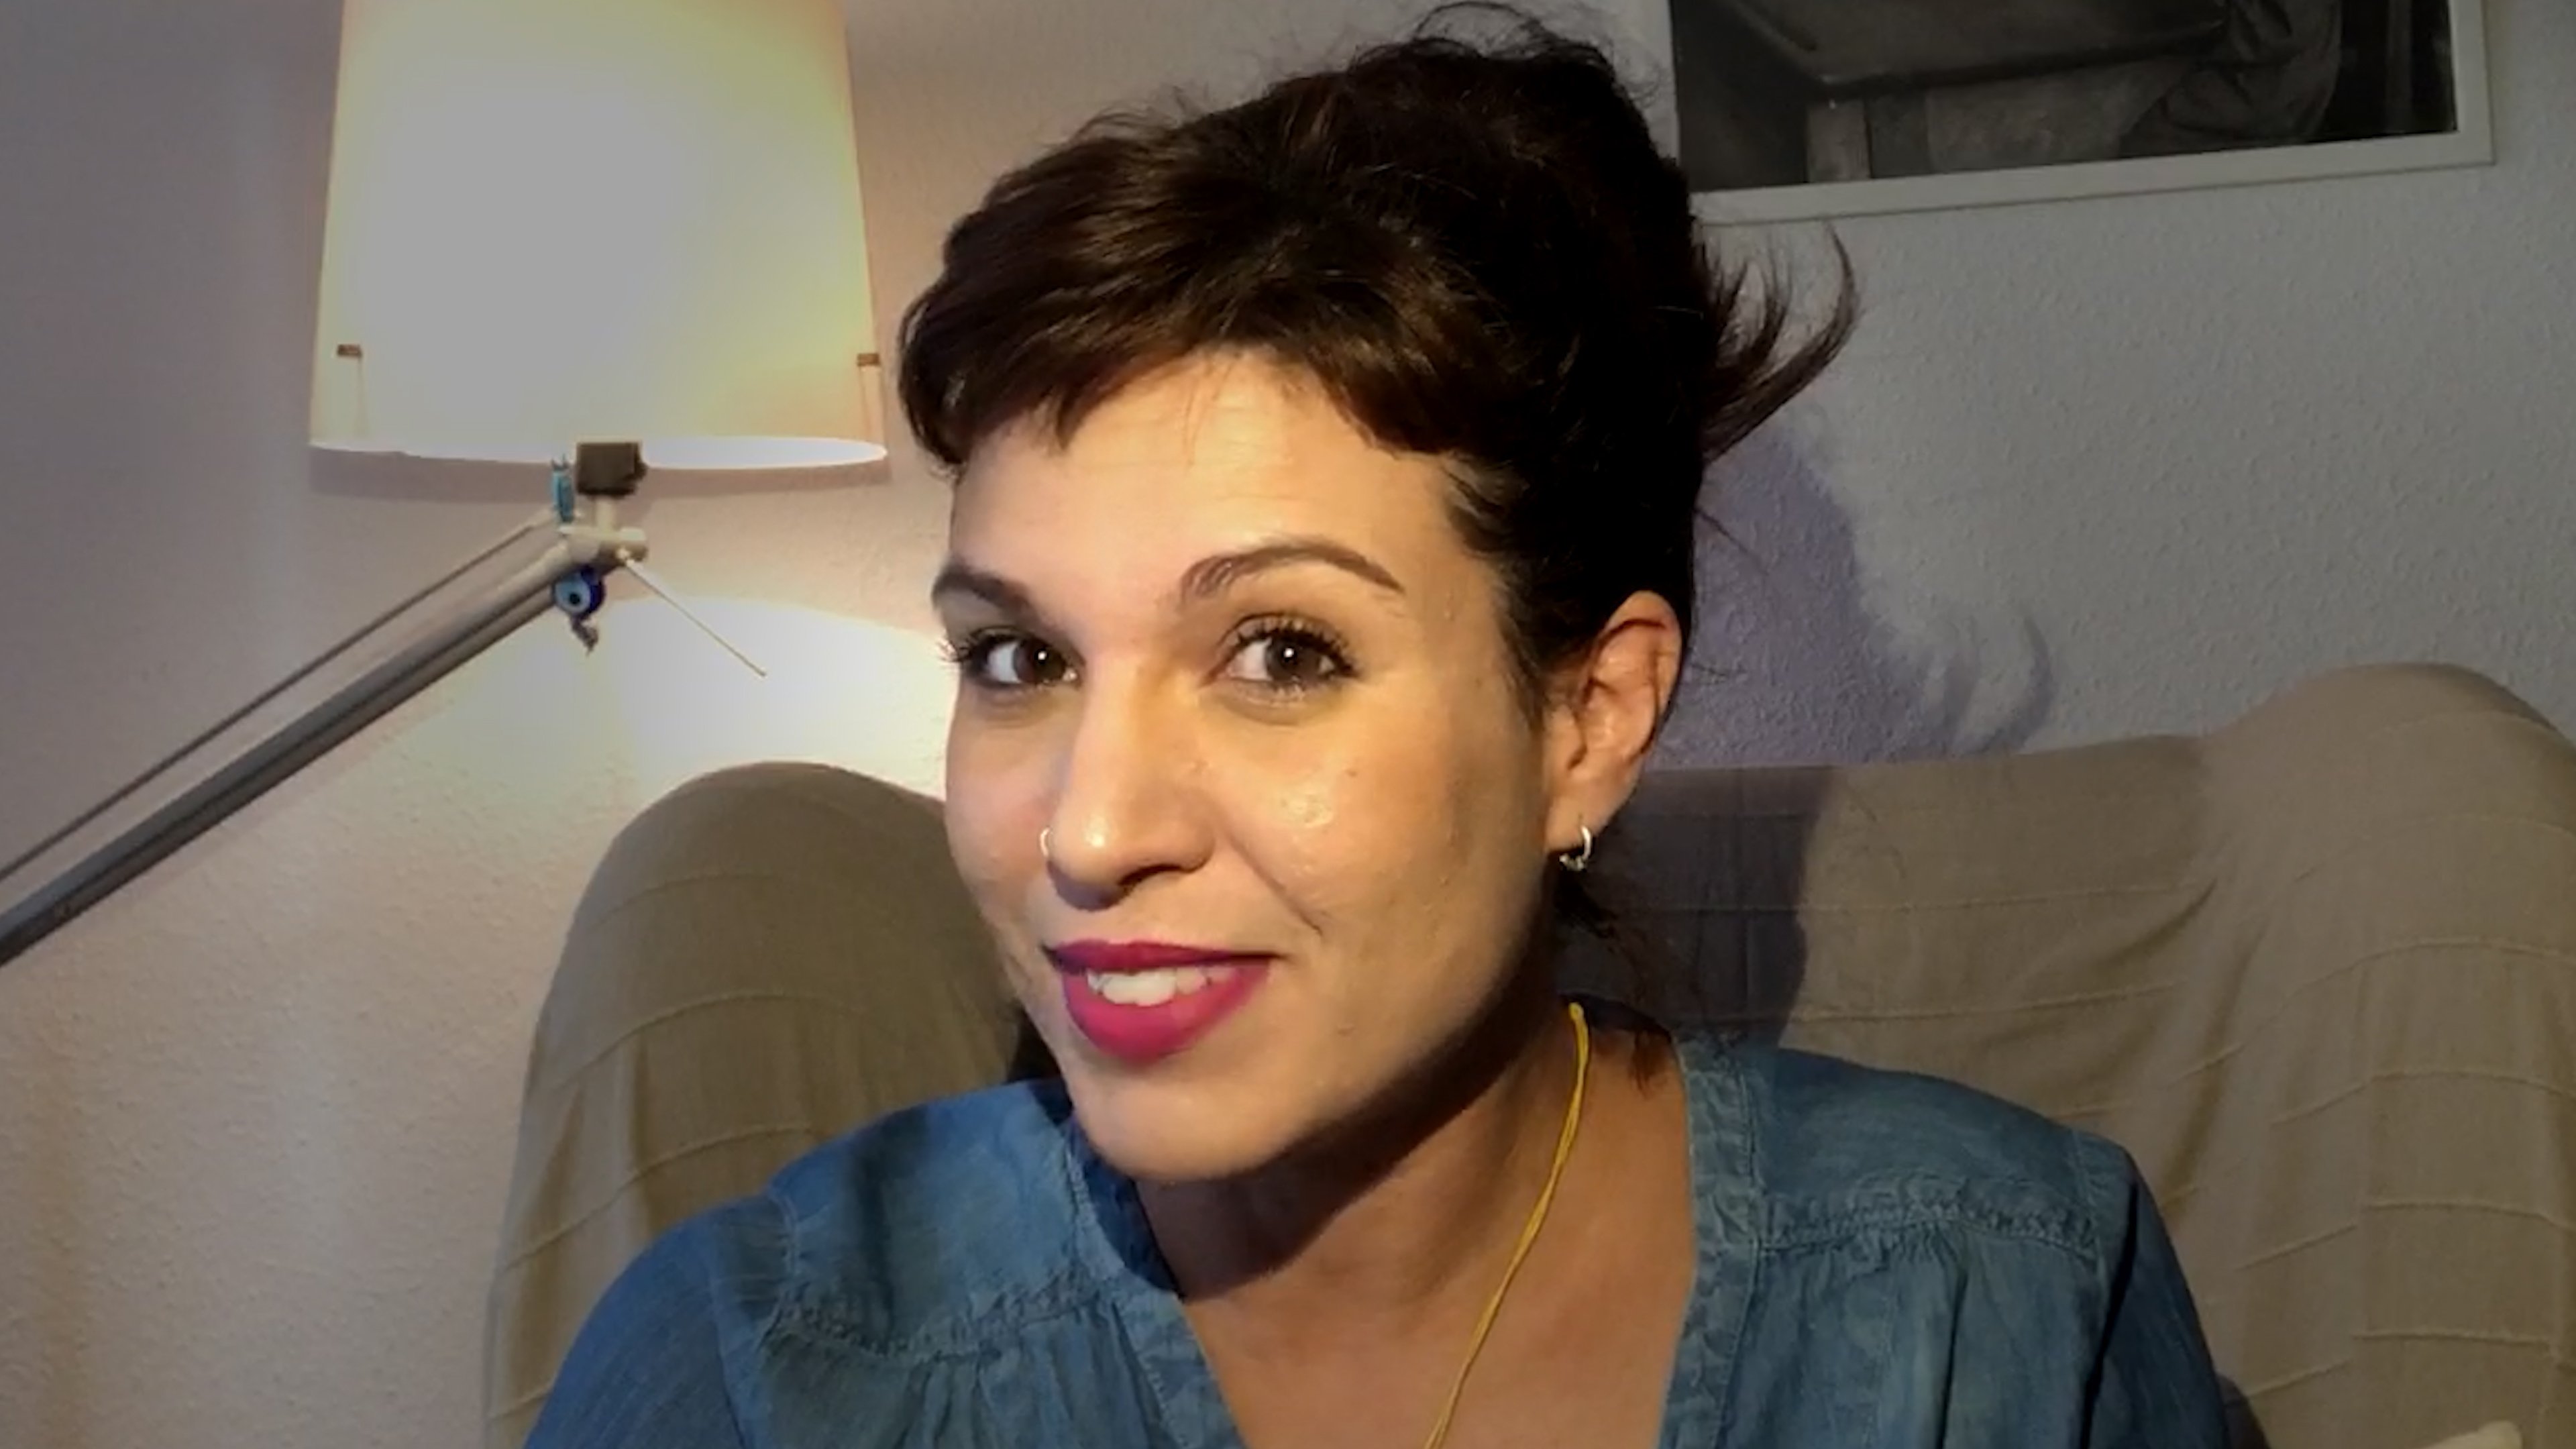 Bea Talegón explica por qué odian TV3: "Les jode"